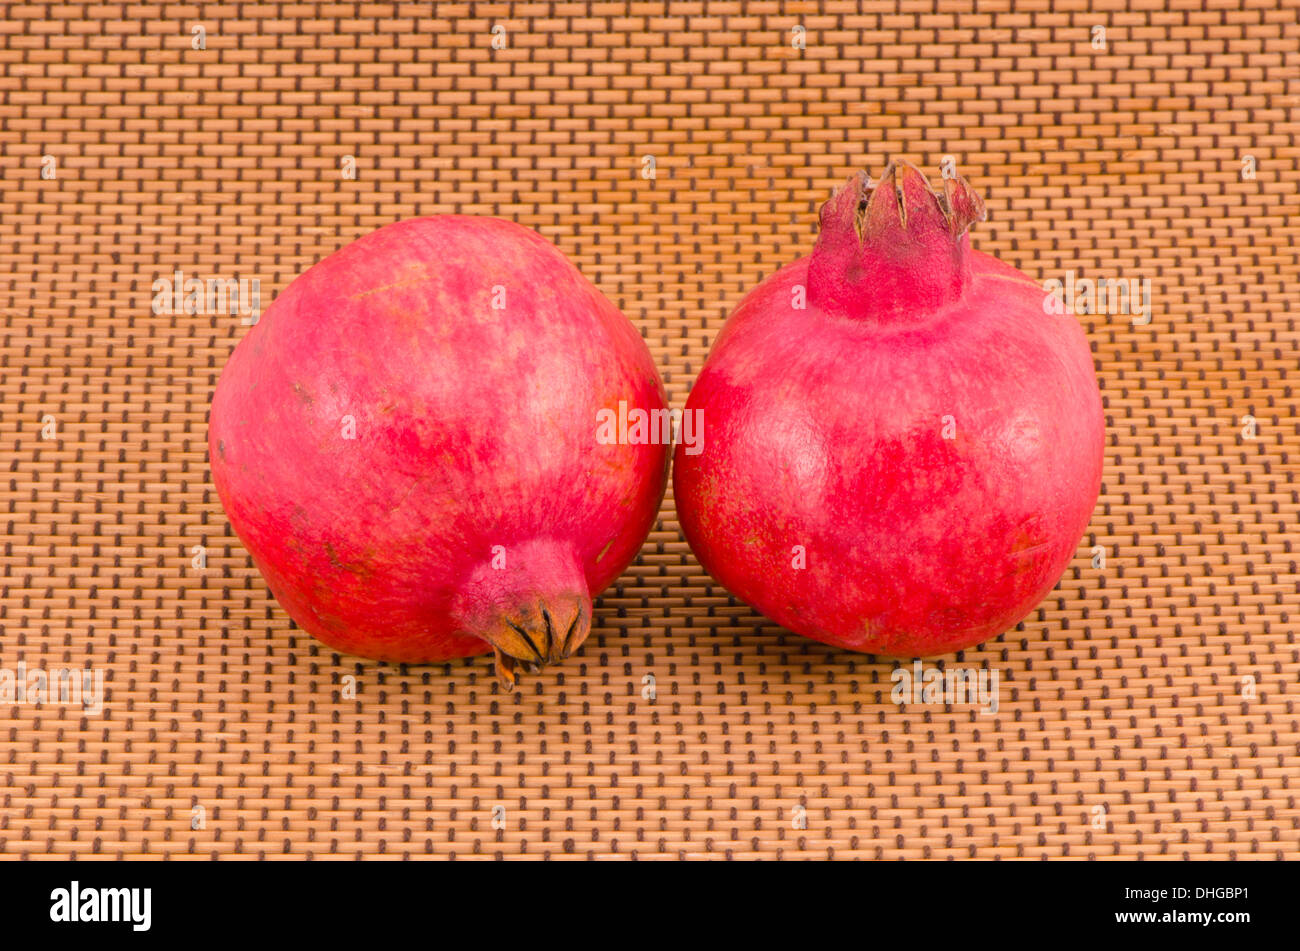 two ripe fresh pomegranate fruits Stock Photo